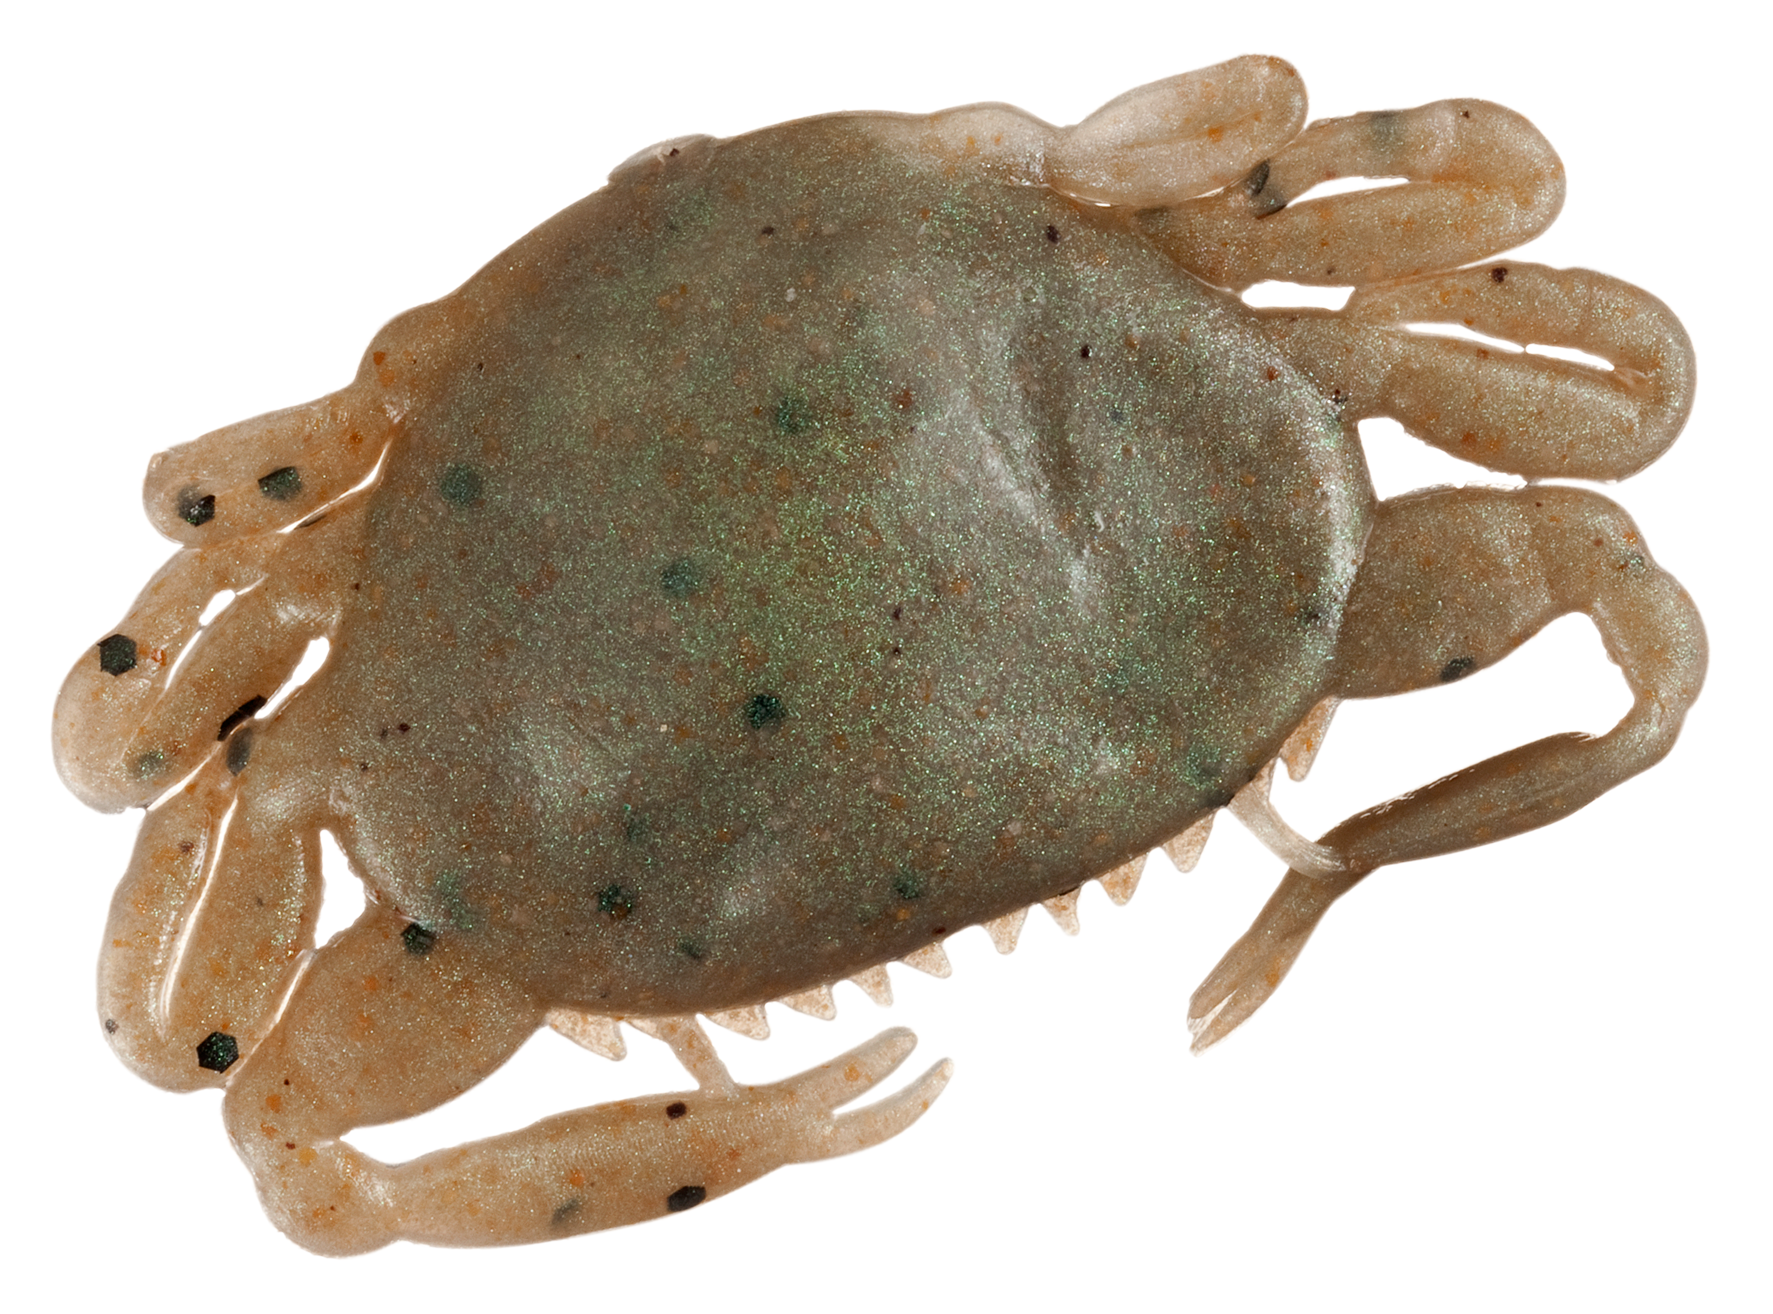 Berkley Gulp Saltwater Peeler Crab 50mm Molting 5pk